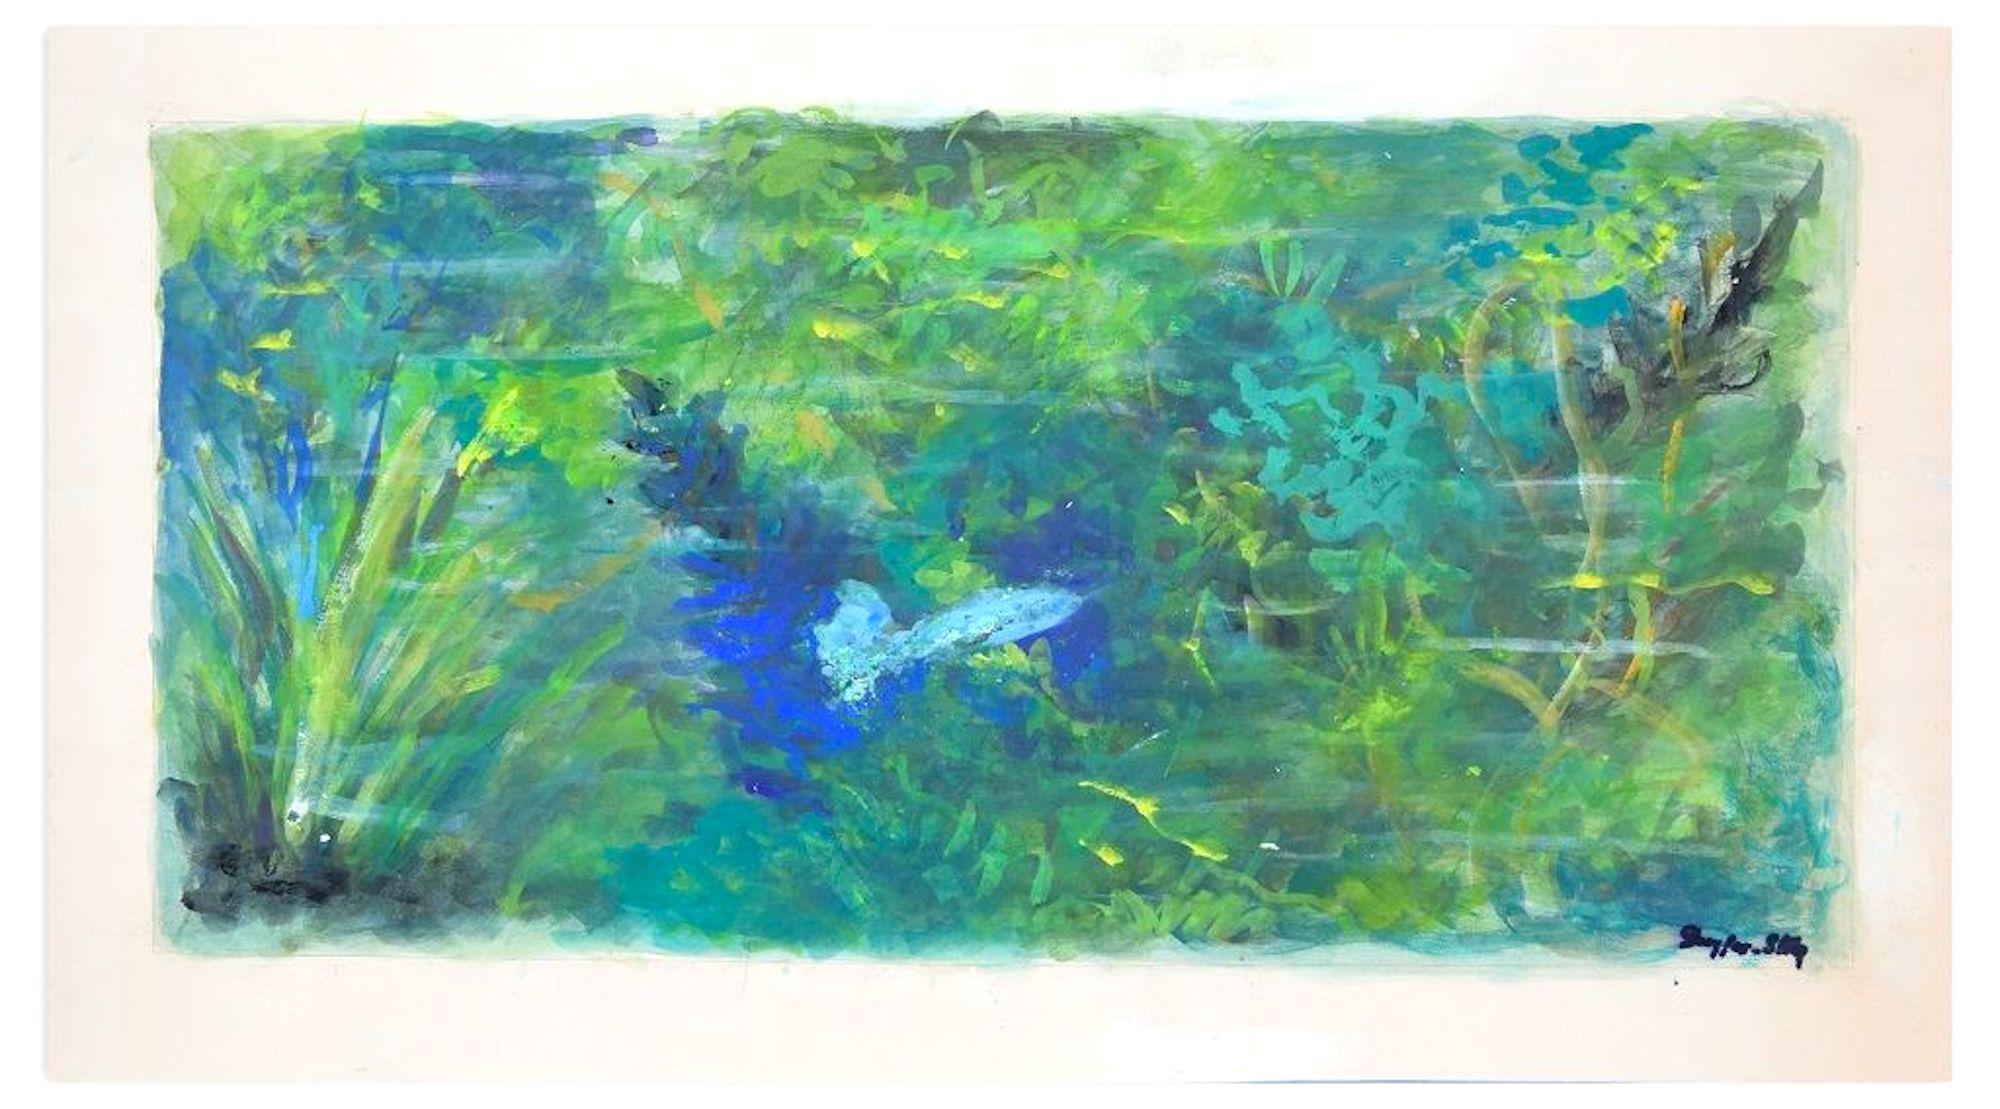 Jean Dreyfus-Stern Abstract Painting - Green Landscape - Original Tempera on Paper by J. Dreyfus-Stern 